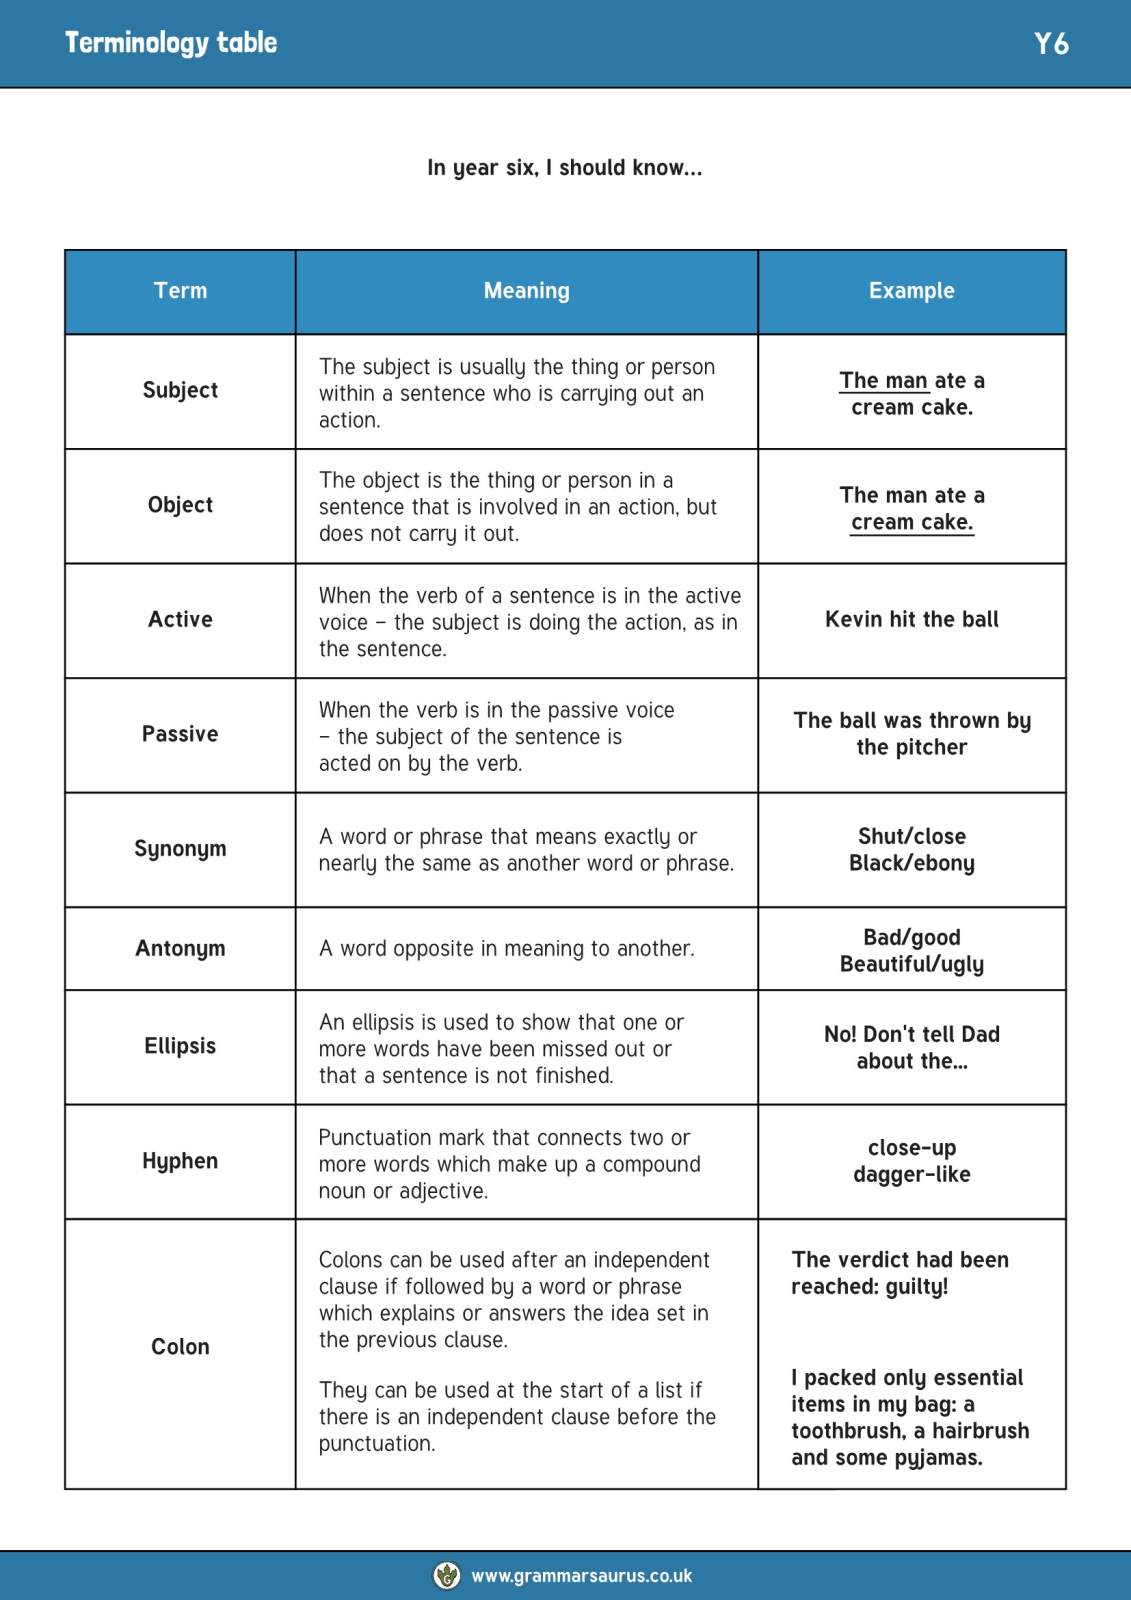 Grammar terminology table Yr6